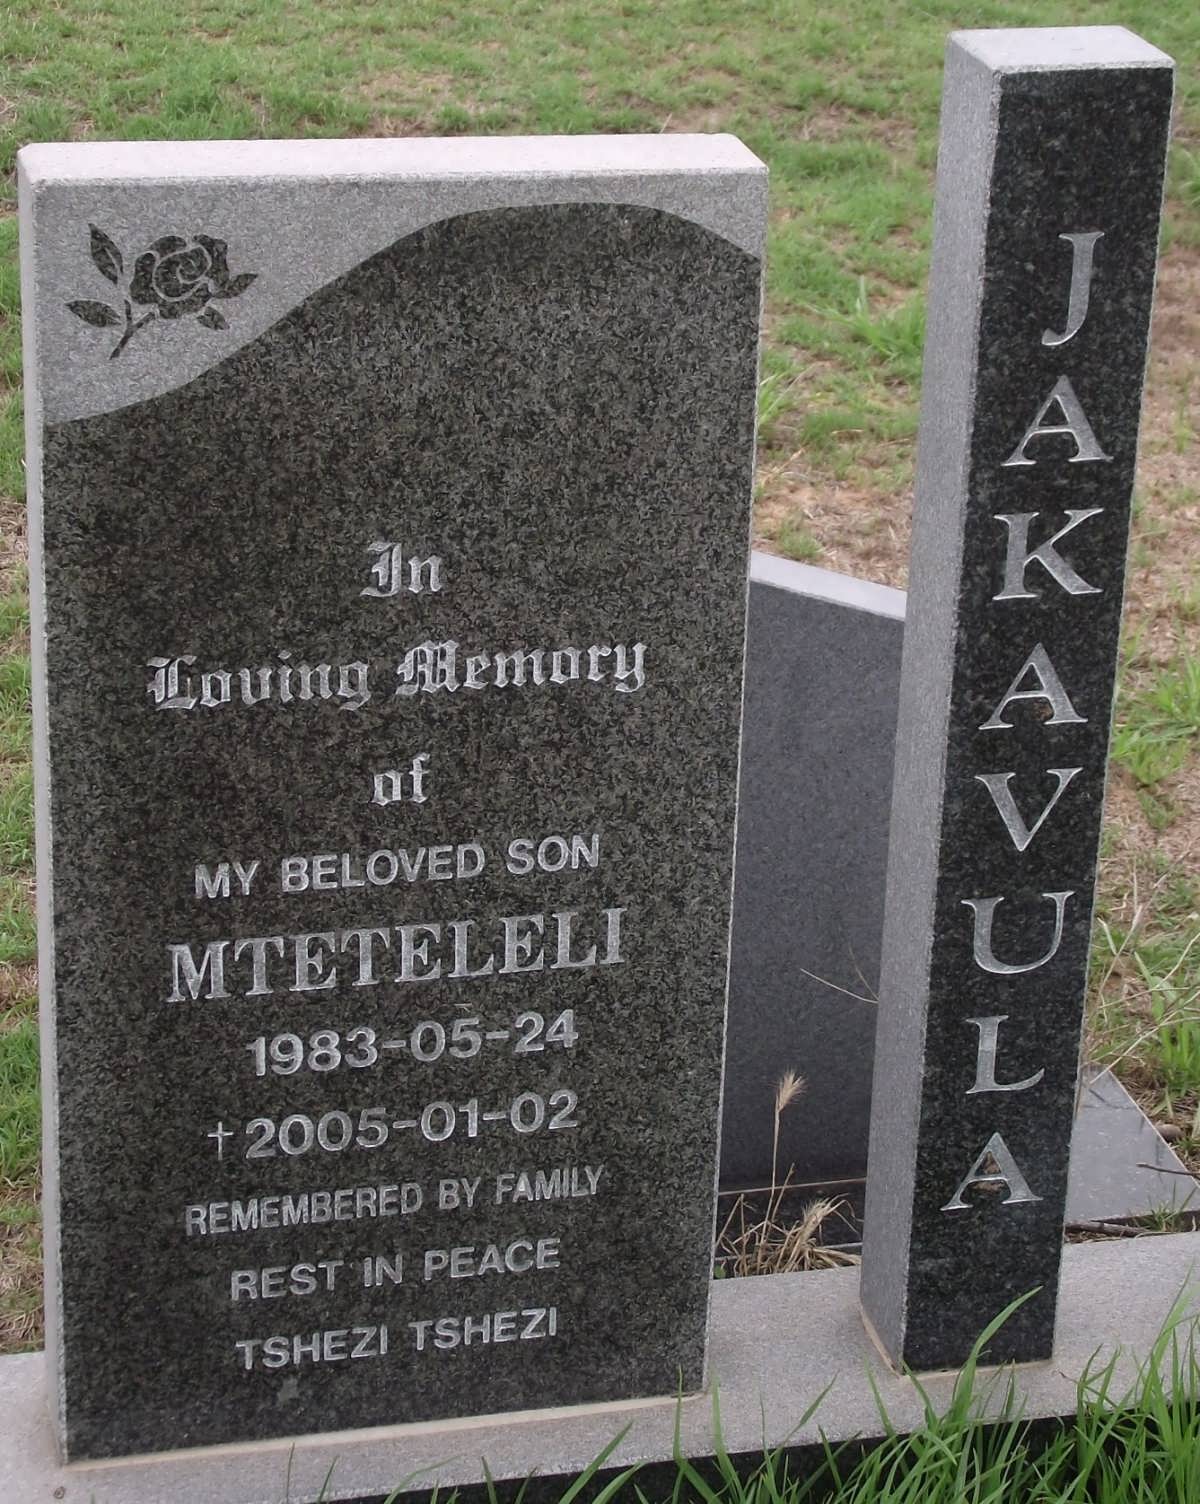 JAKAVULA Mteteleli 1983-2005